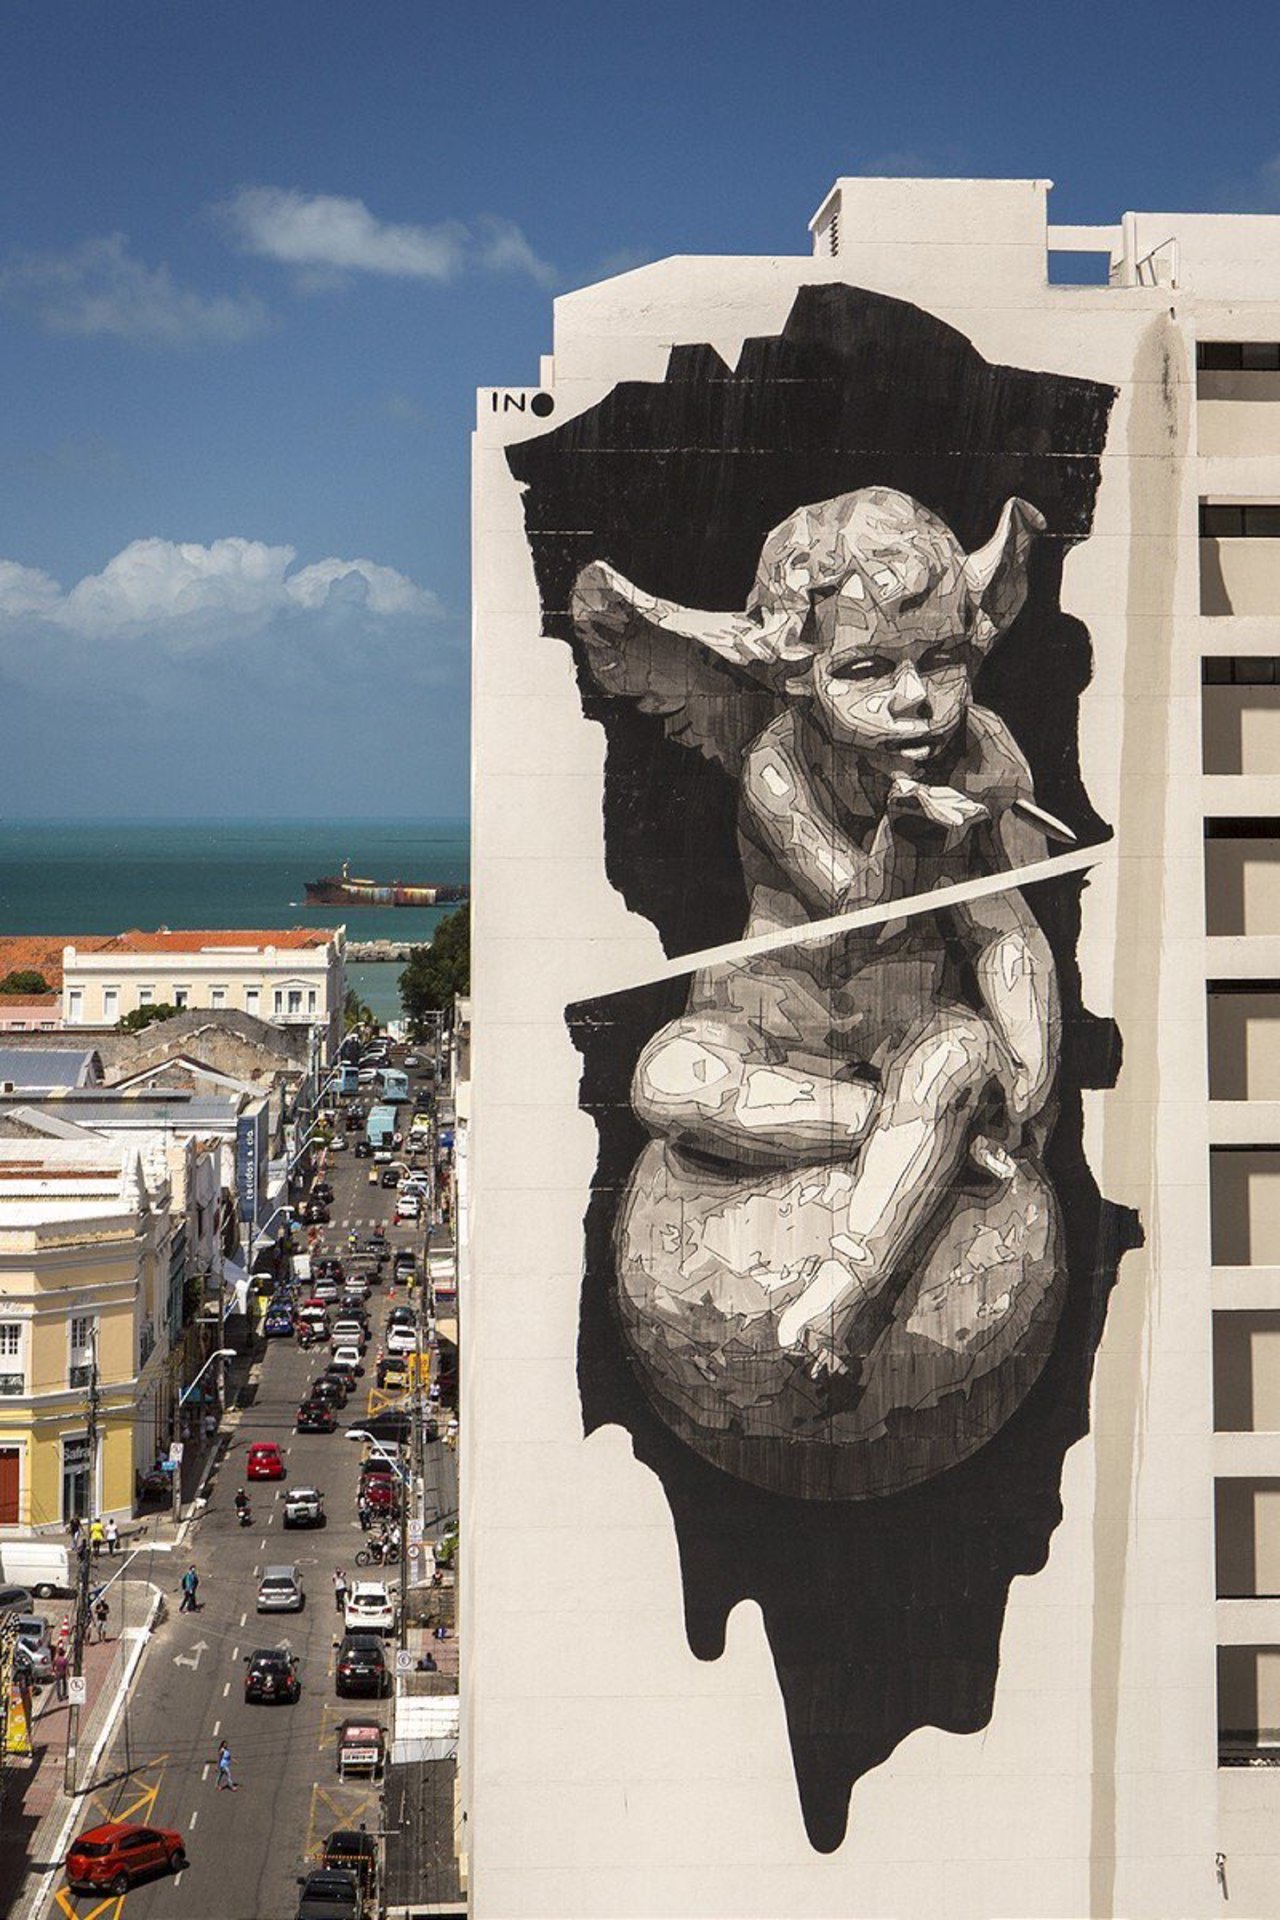 #mural by INO #Fortaleza #Brazil #streetart #art #urbanart #graffiti https://t.co/uG7gIbbsQ0